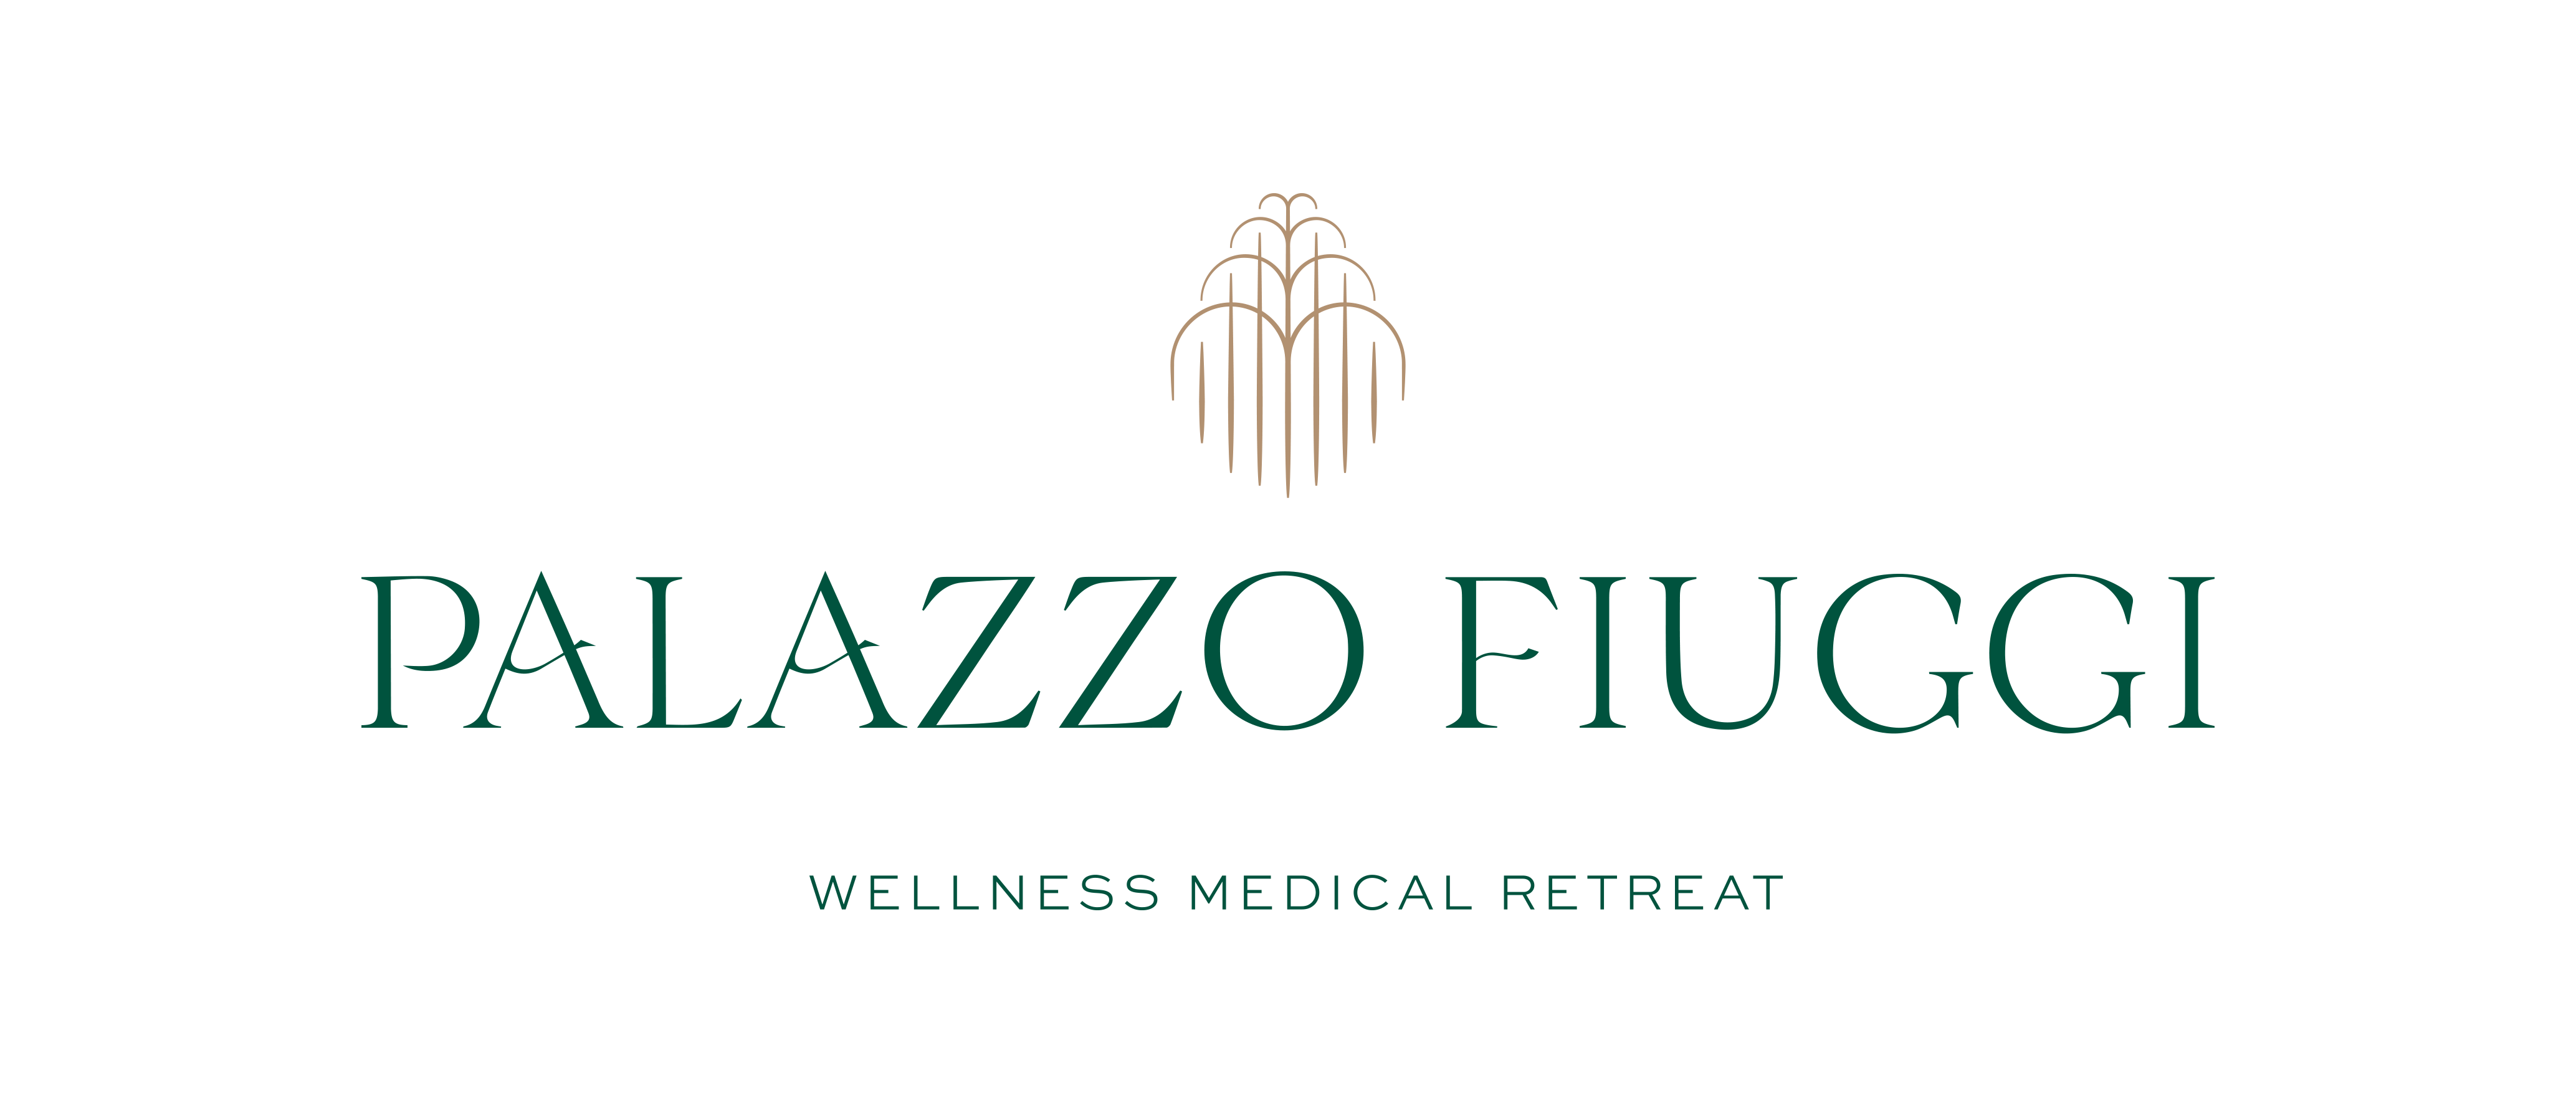 Logo - PALAZZO FIUGGI - WELLNESS MEDICAL RETREAT